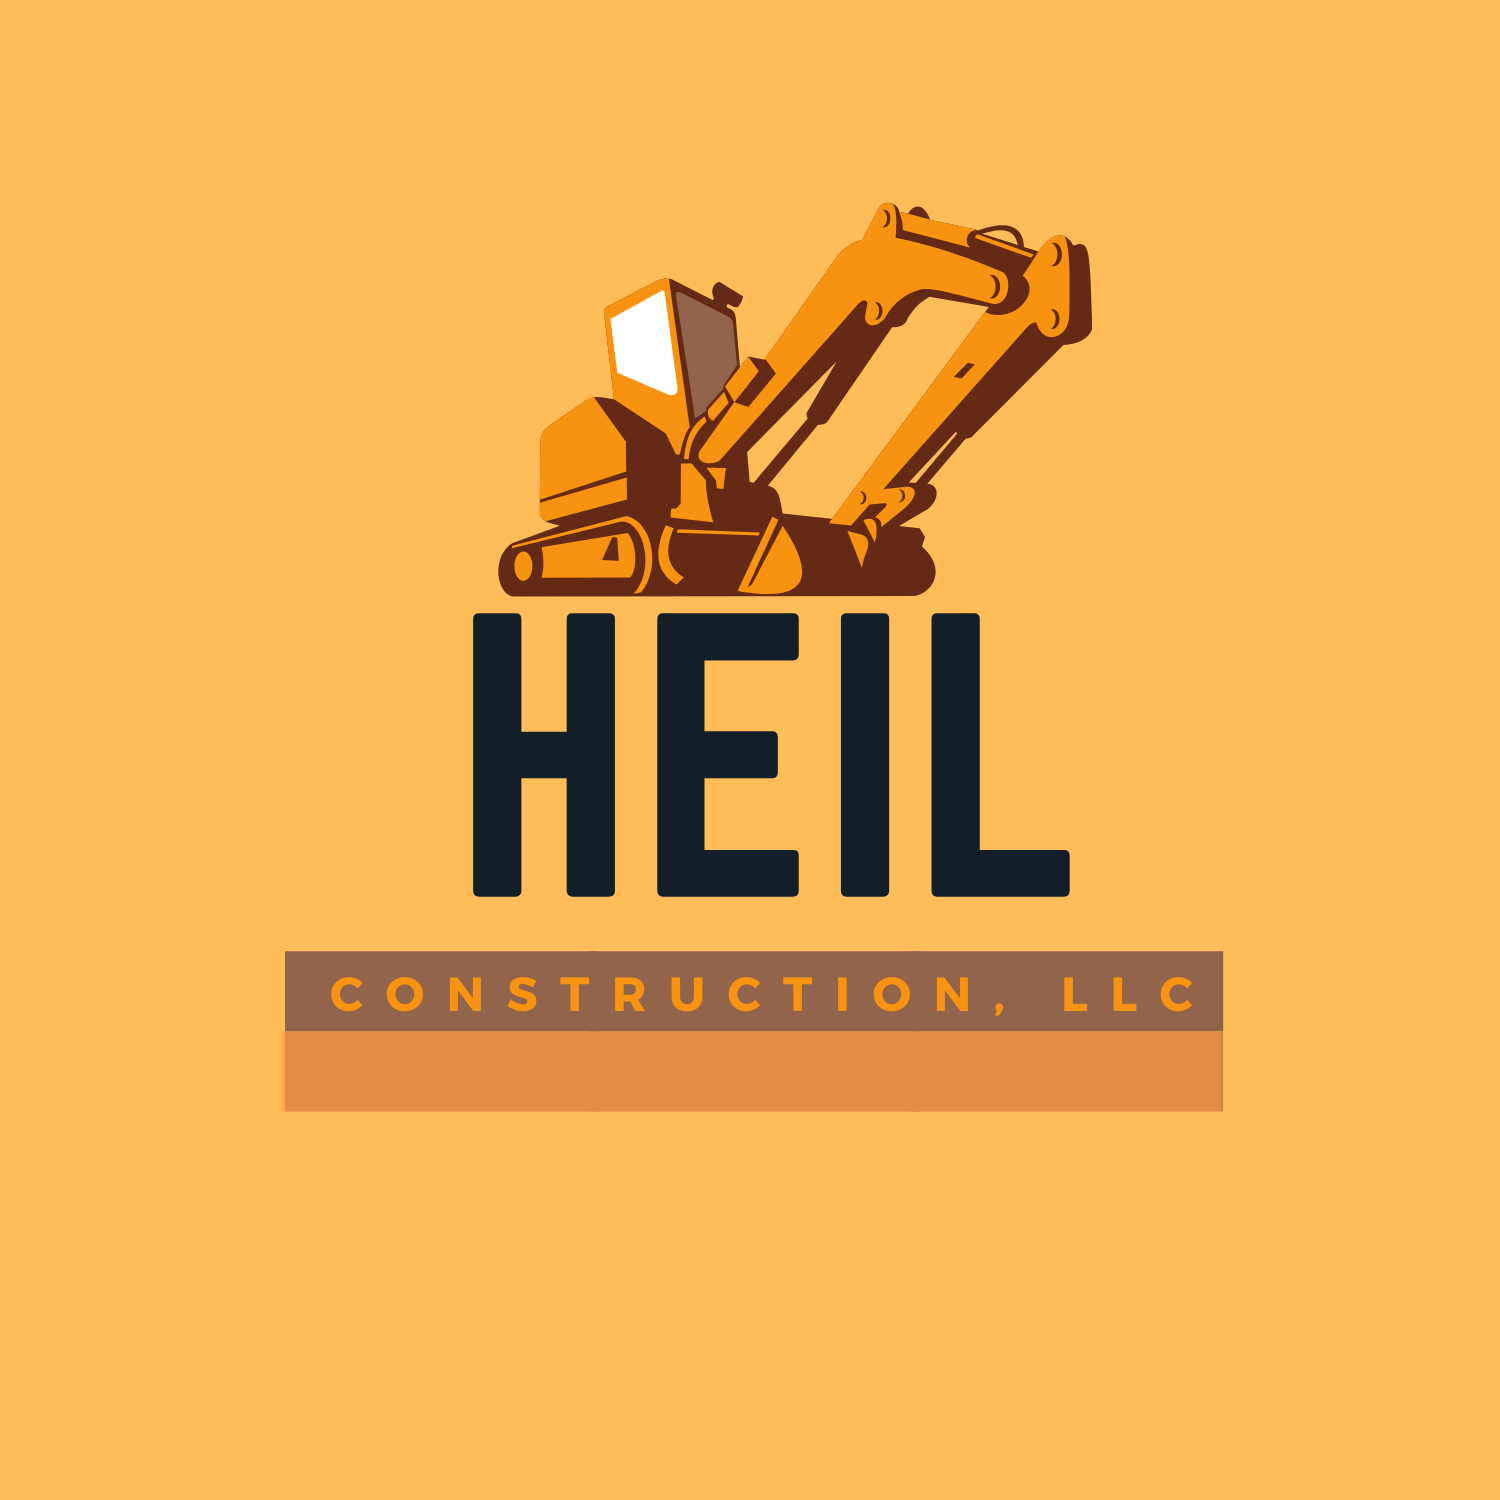 Heil Construction, LLC Logo